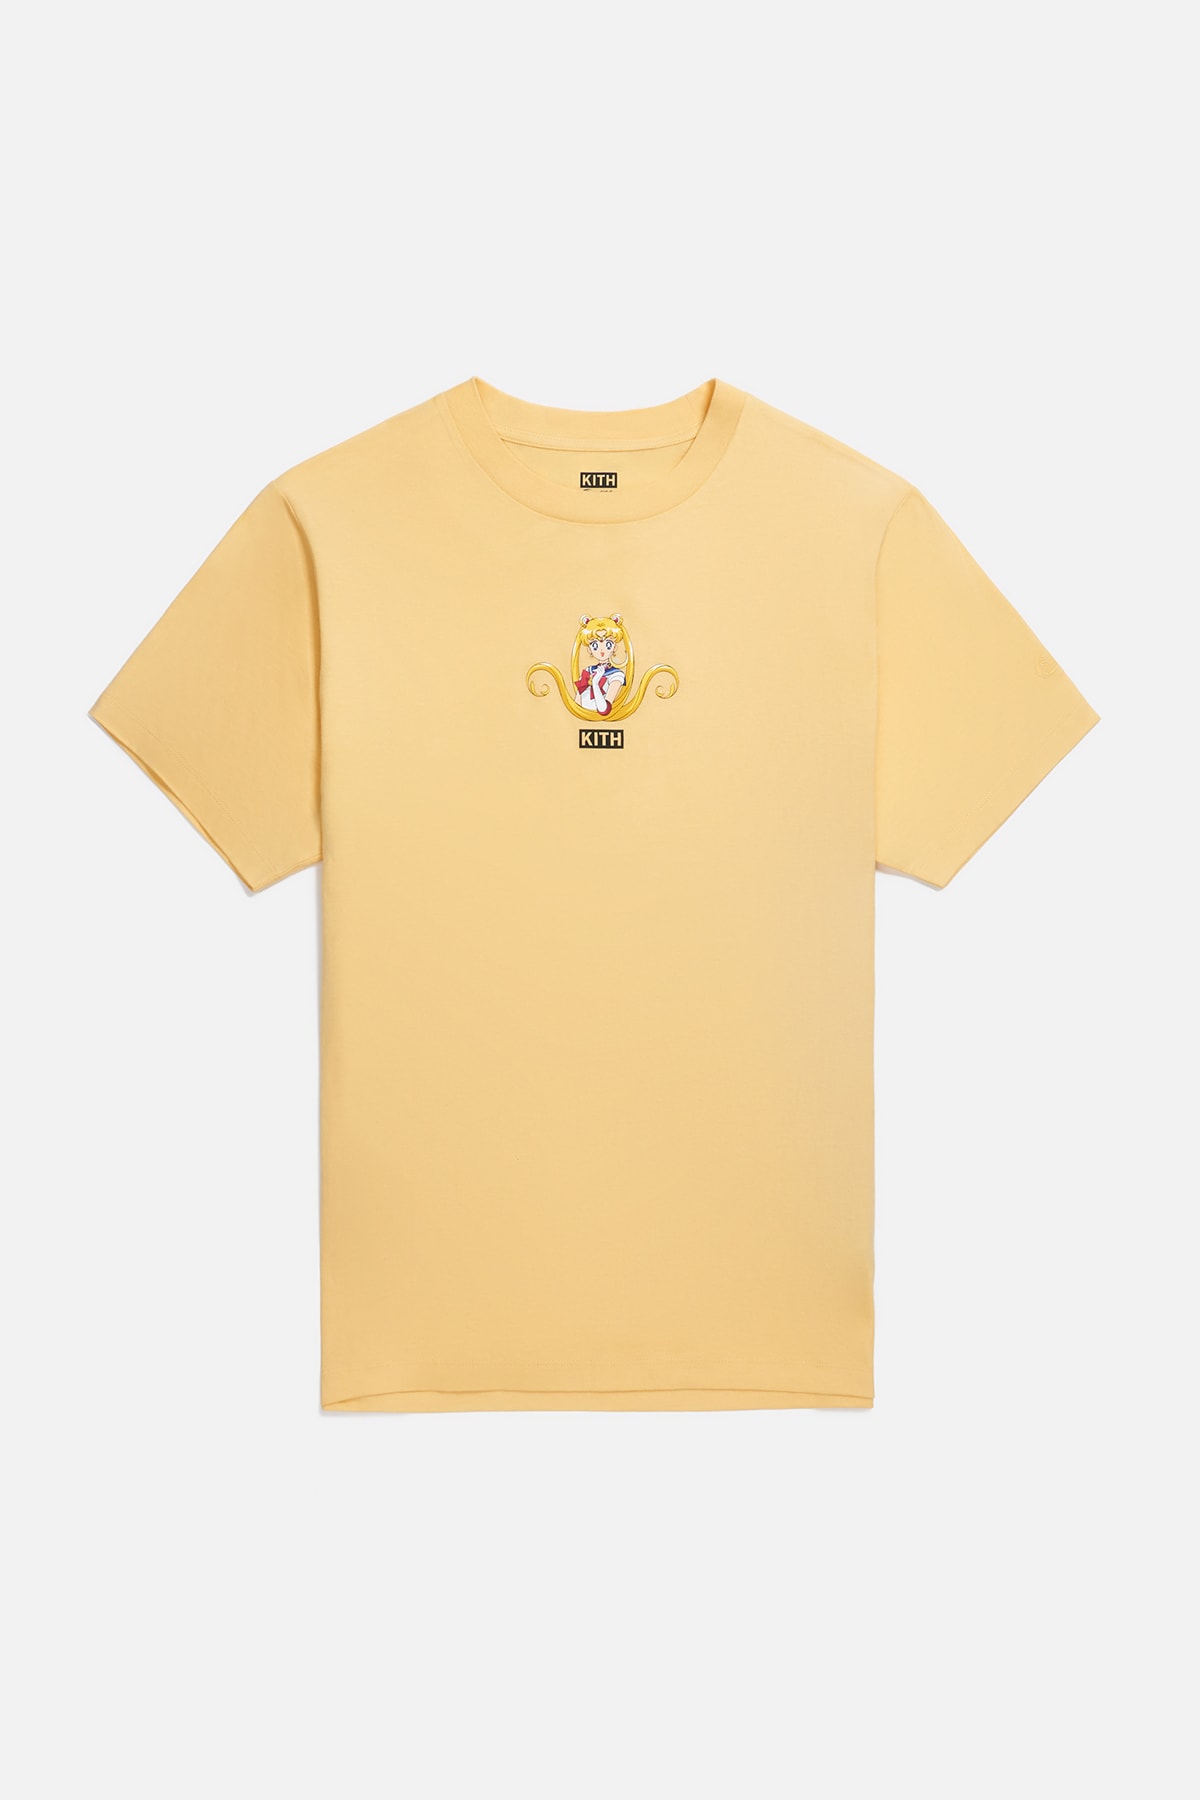 Sailor Moon x KITH Women Collaboration Collection T-Shirt Yellow